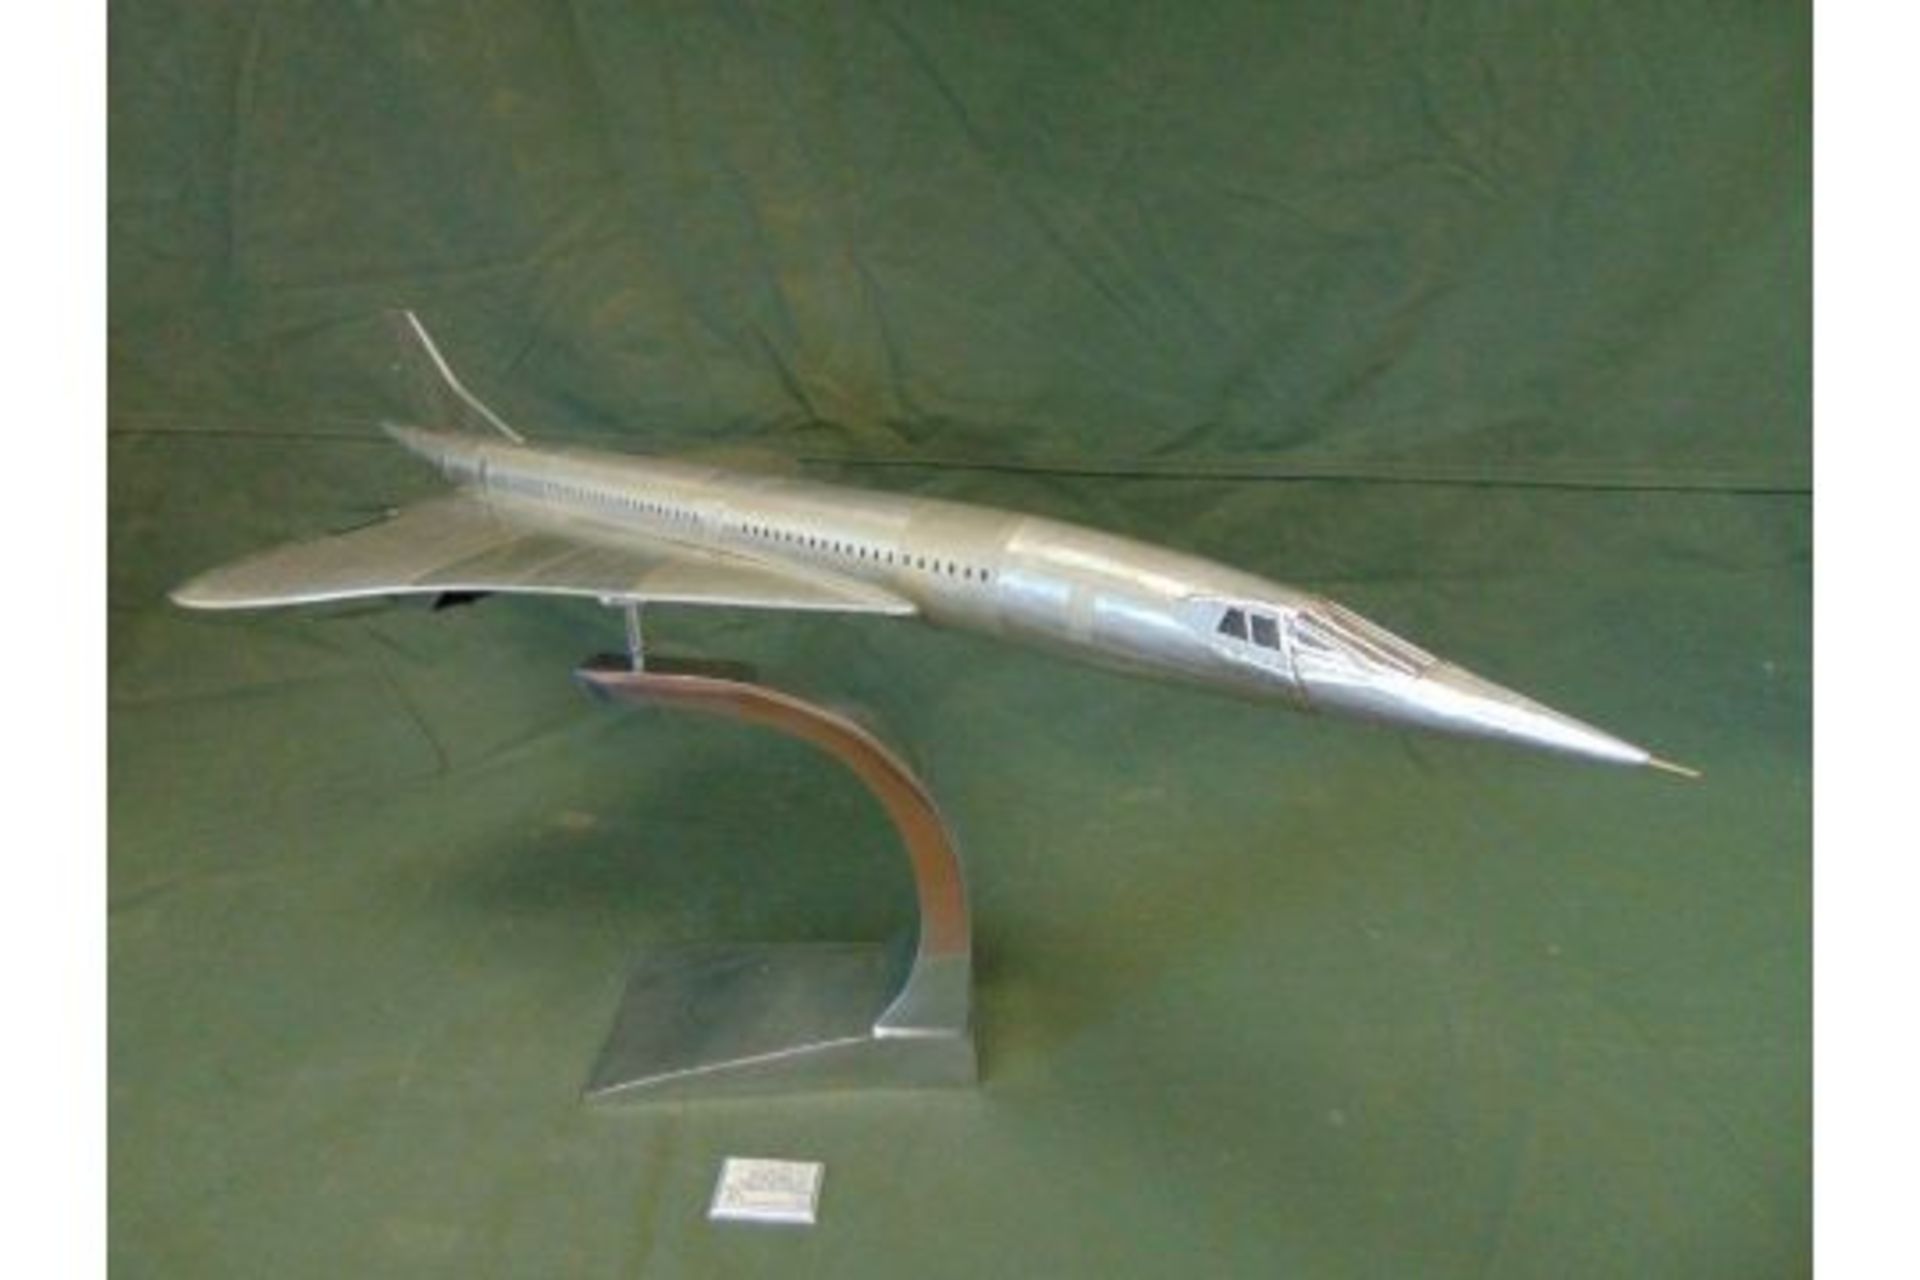 NEW JUST LANDED Large Aluminium Concorde Model